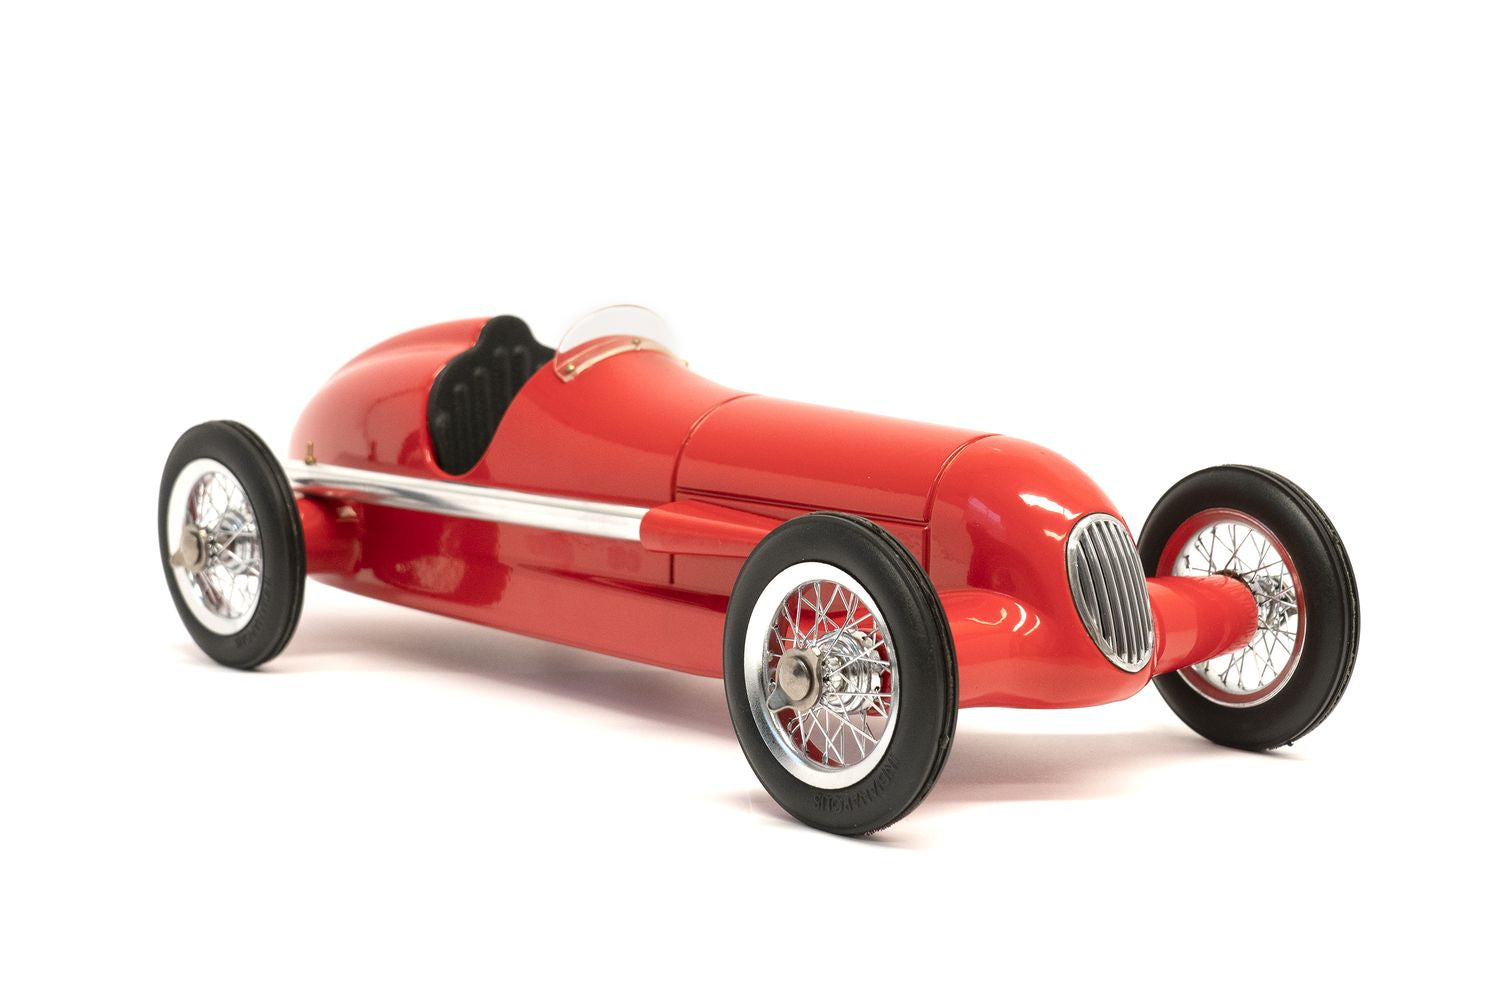 Authentic Models Racer Modelauto, rouge